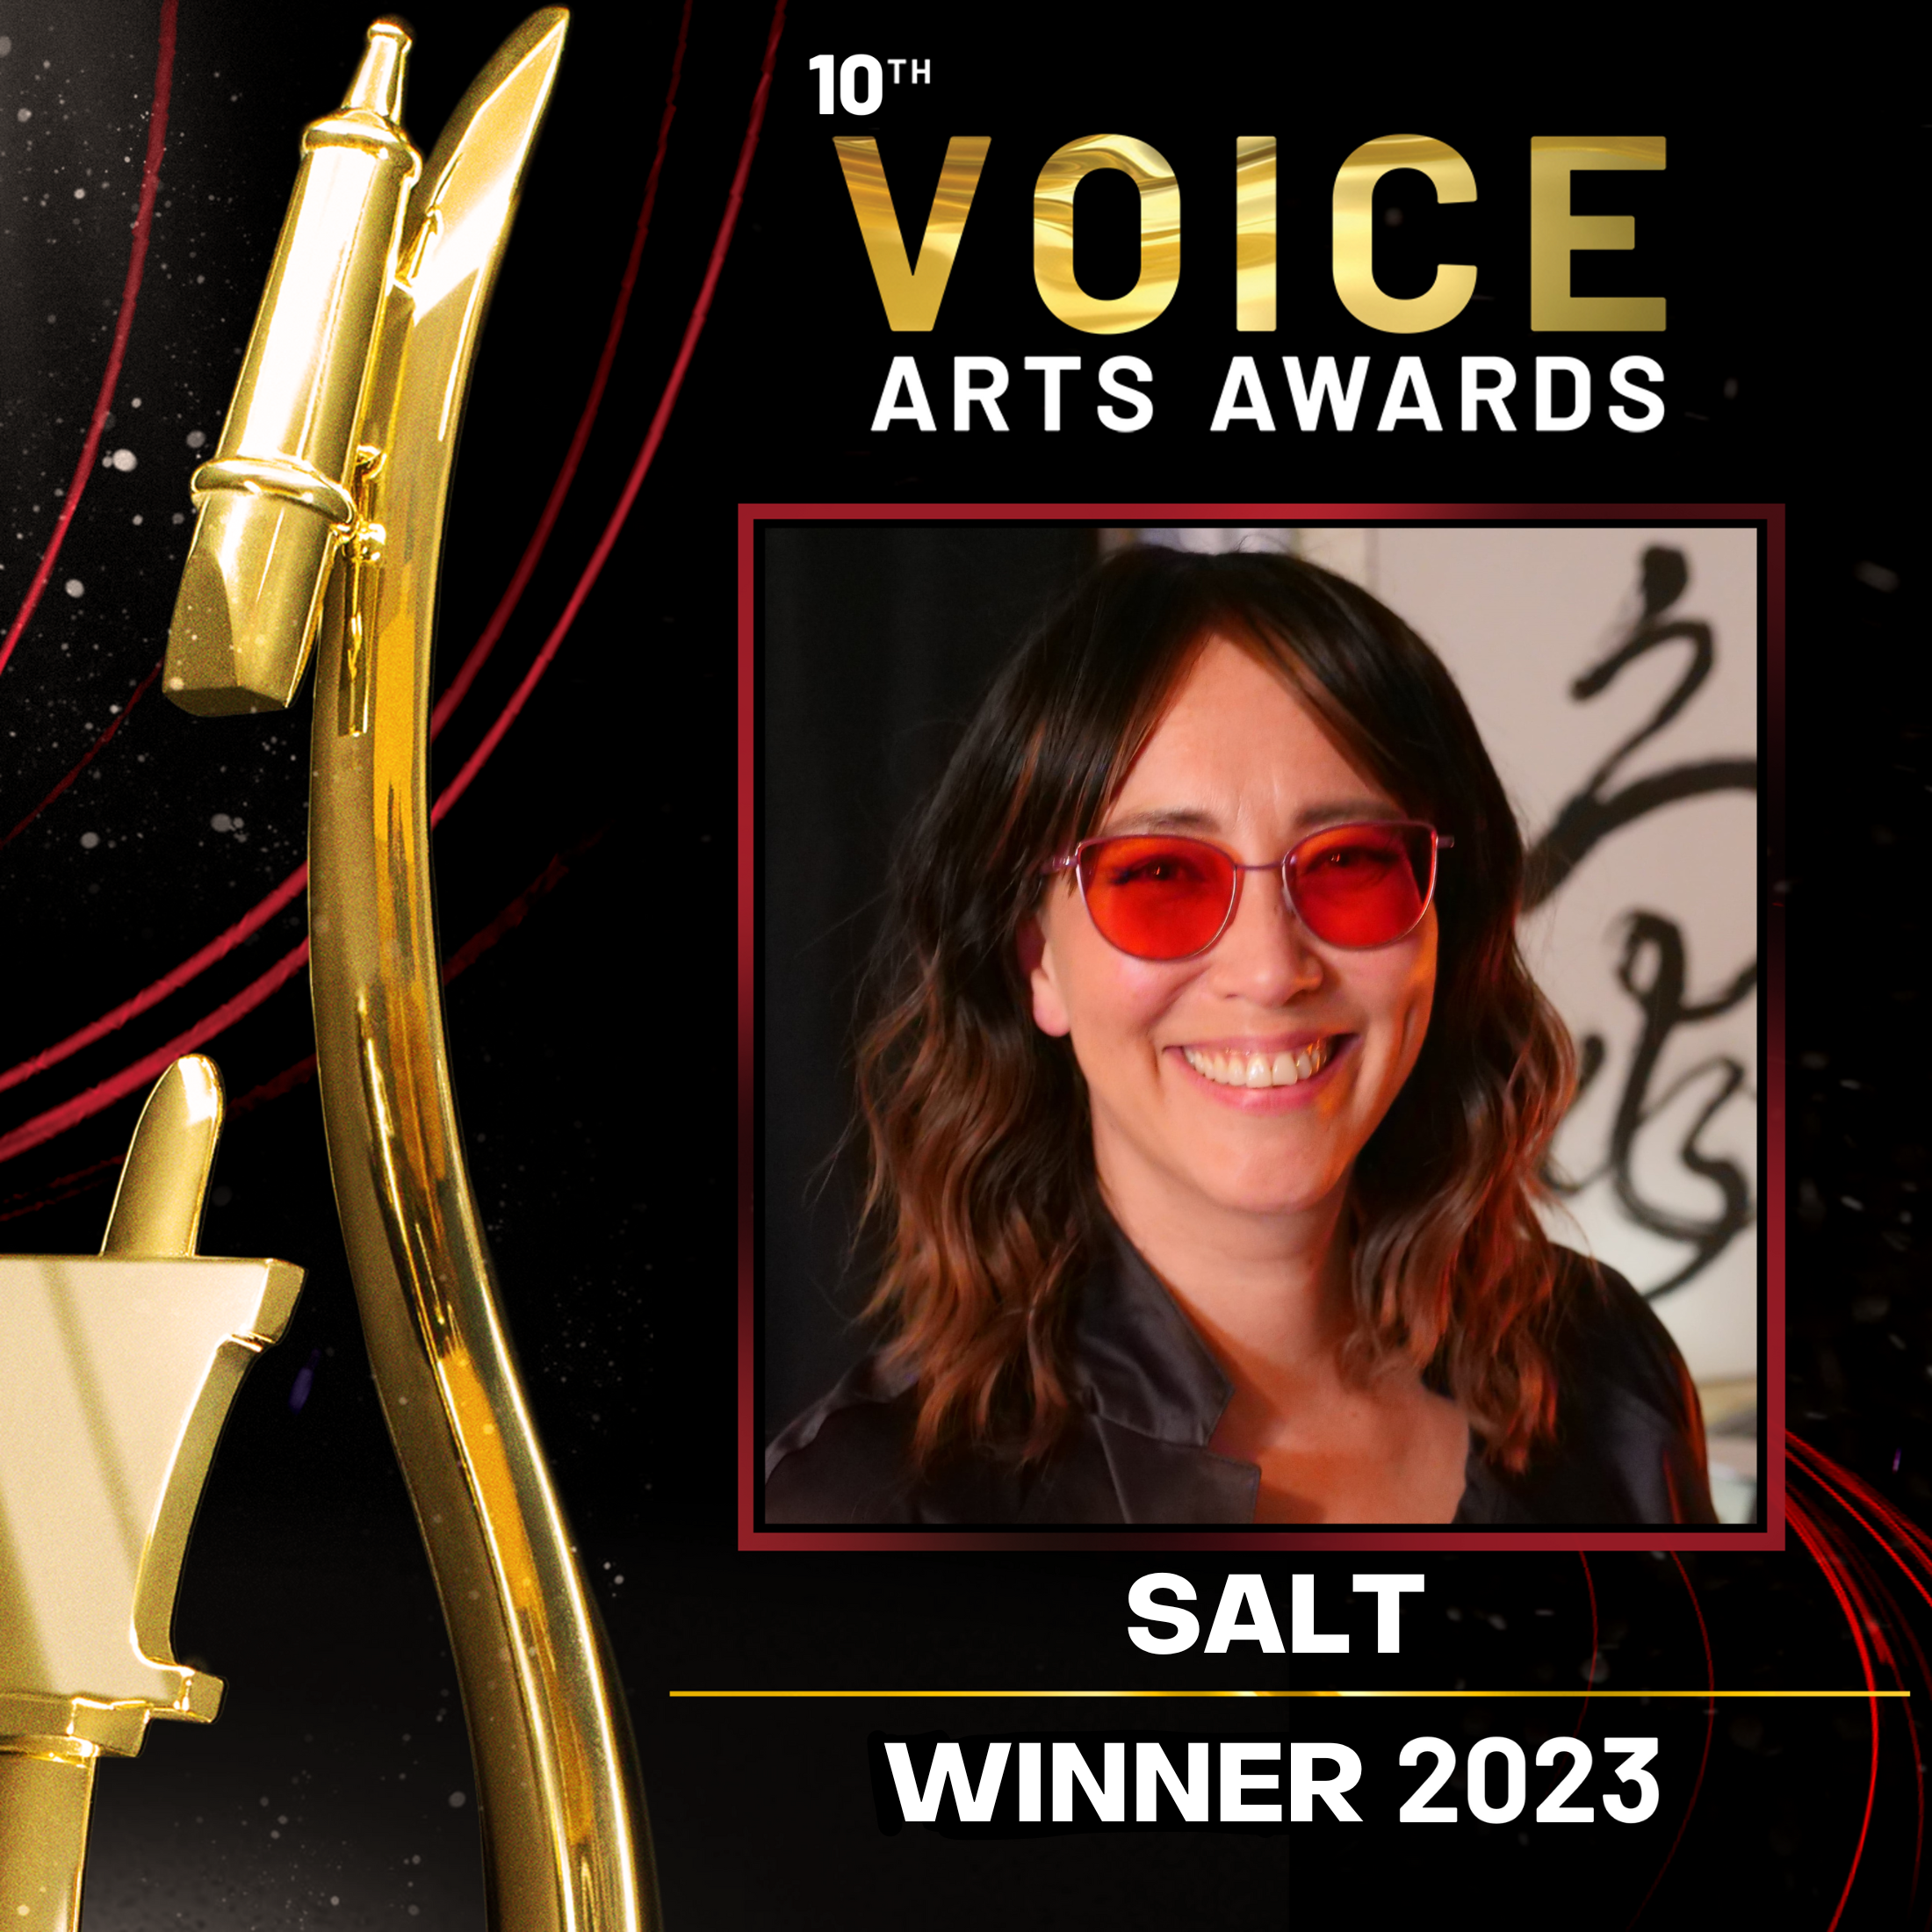 Salt wins Voice Arts Awards